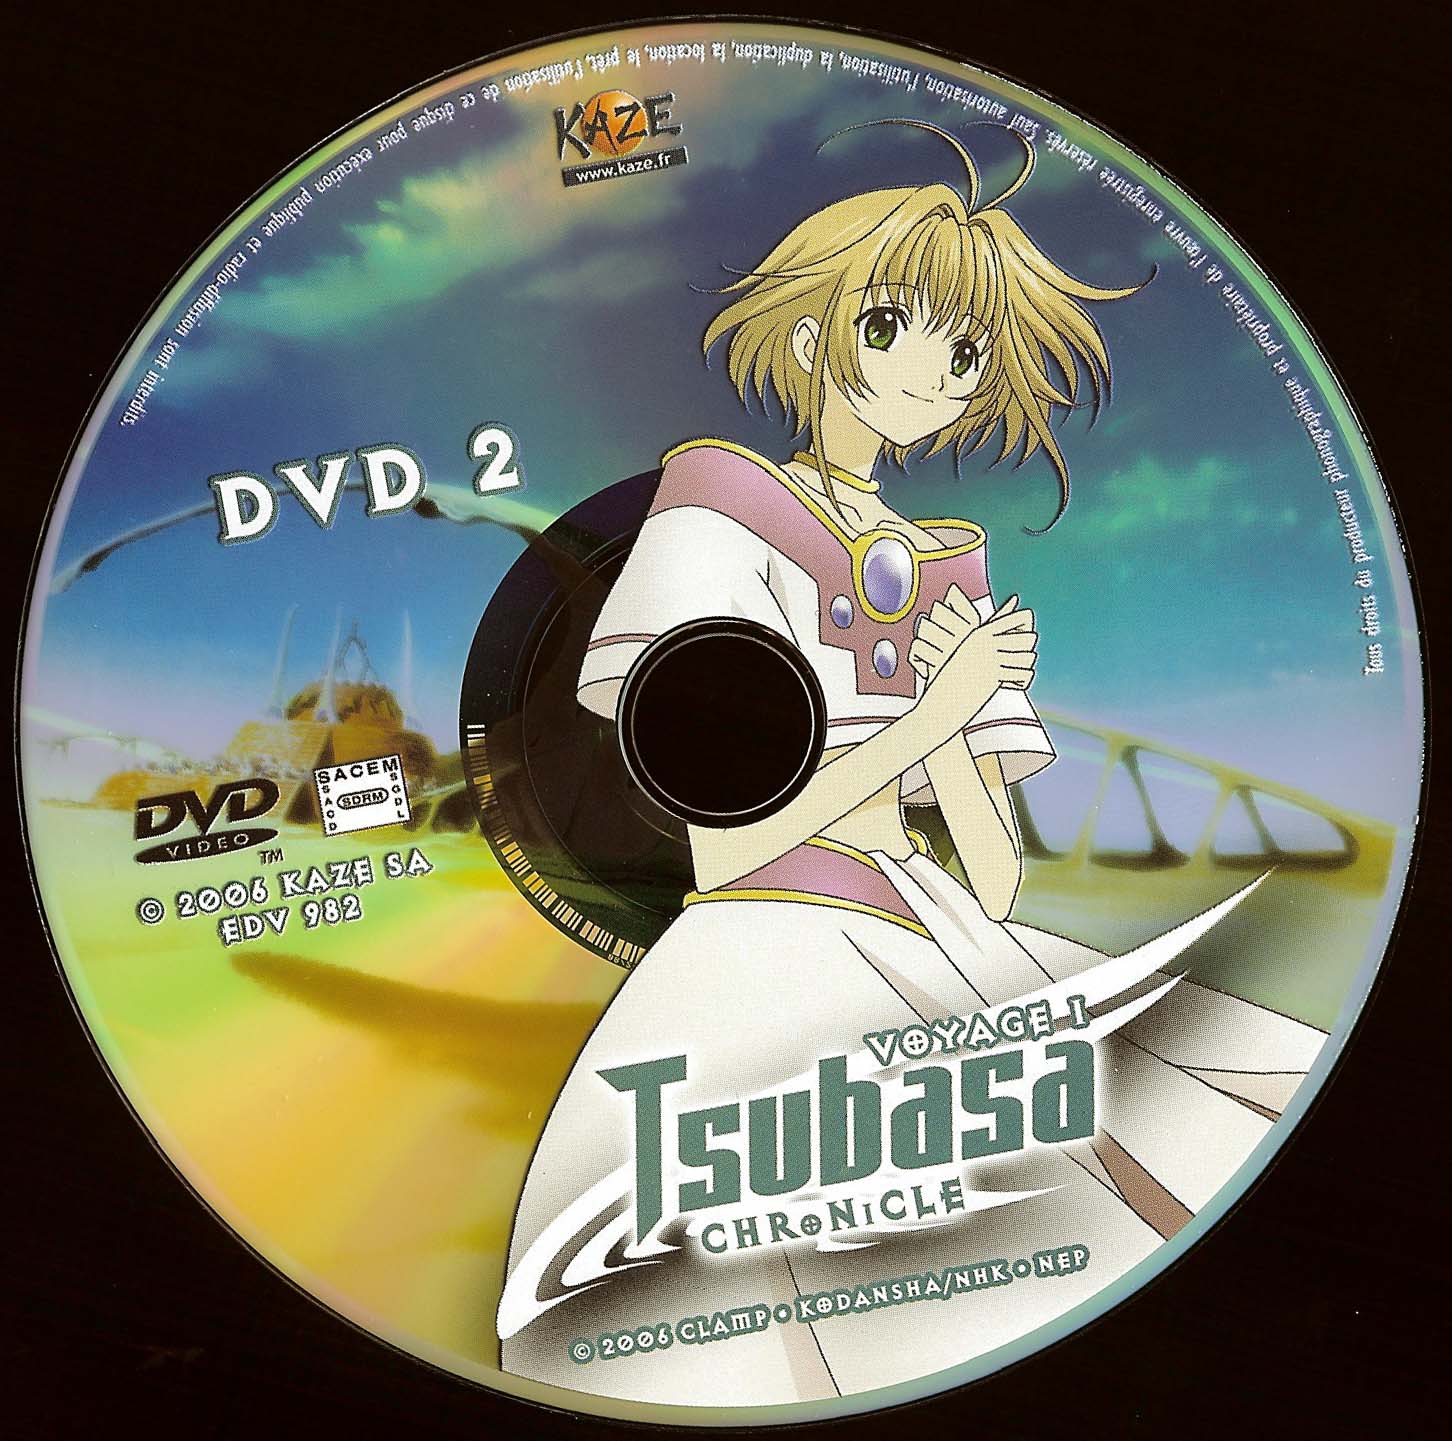 Tsubasa chronicle - voyage 1 - DVD 2